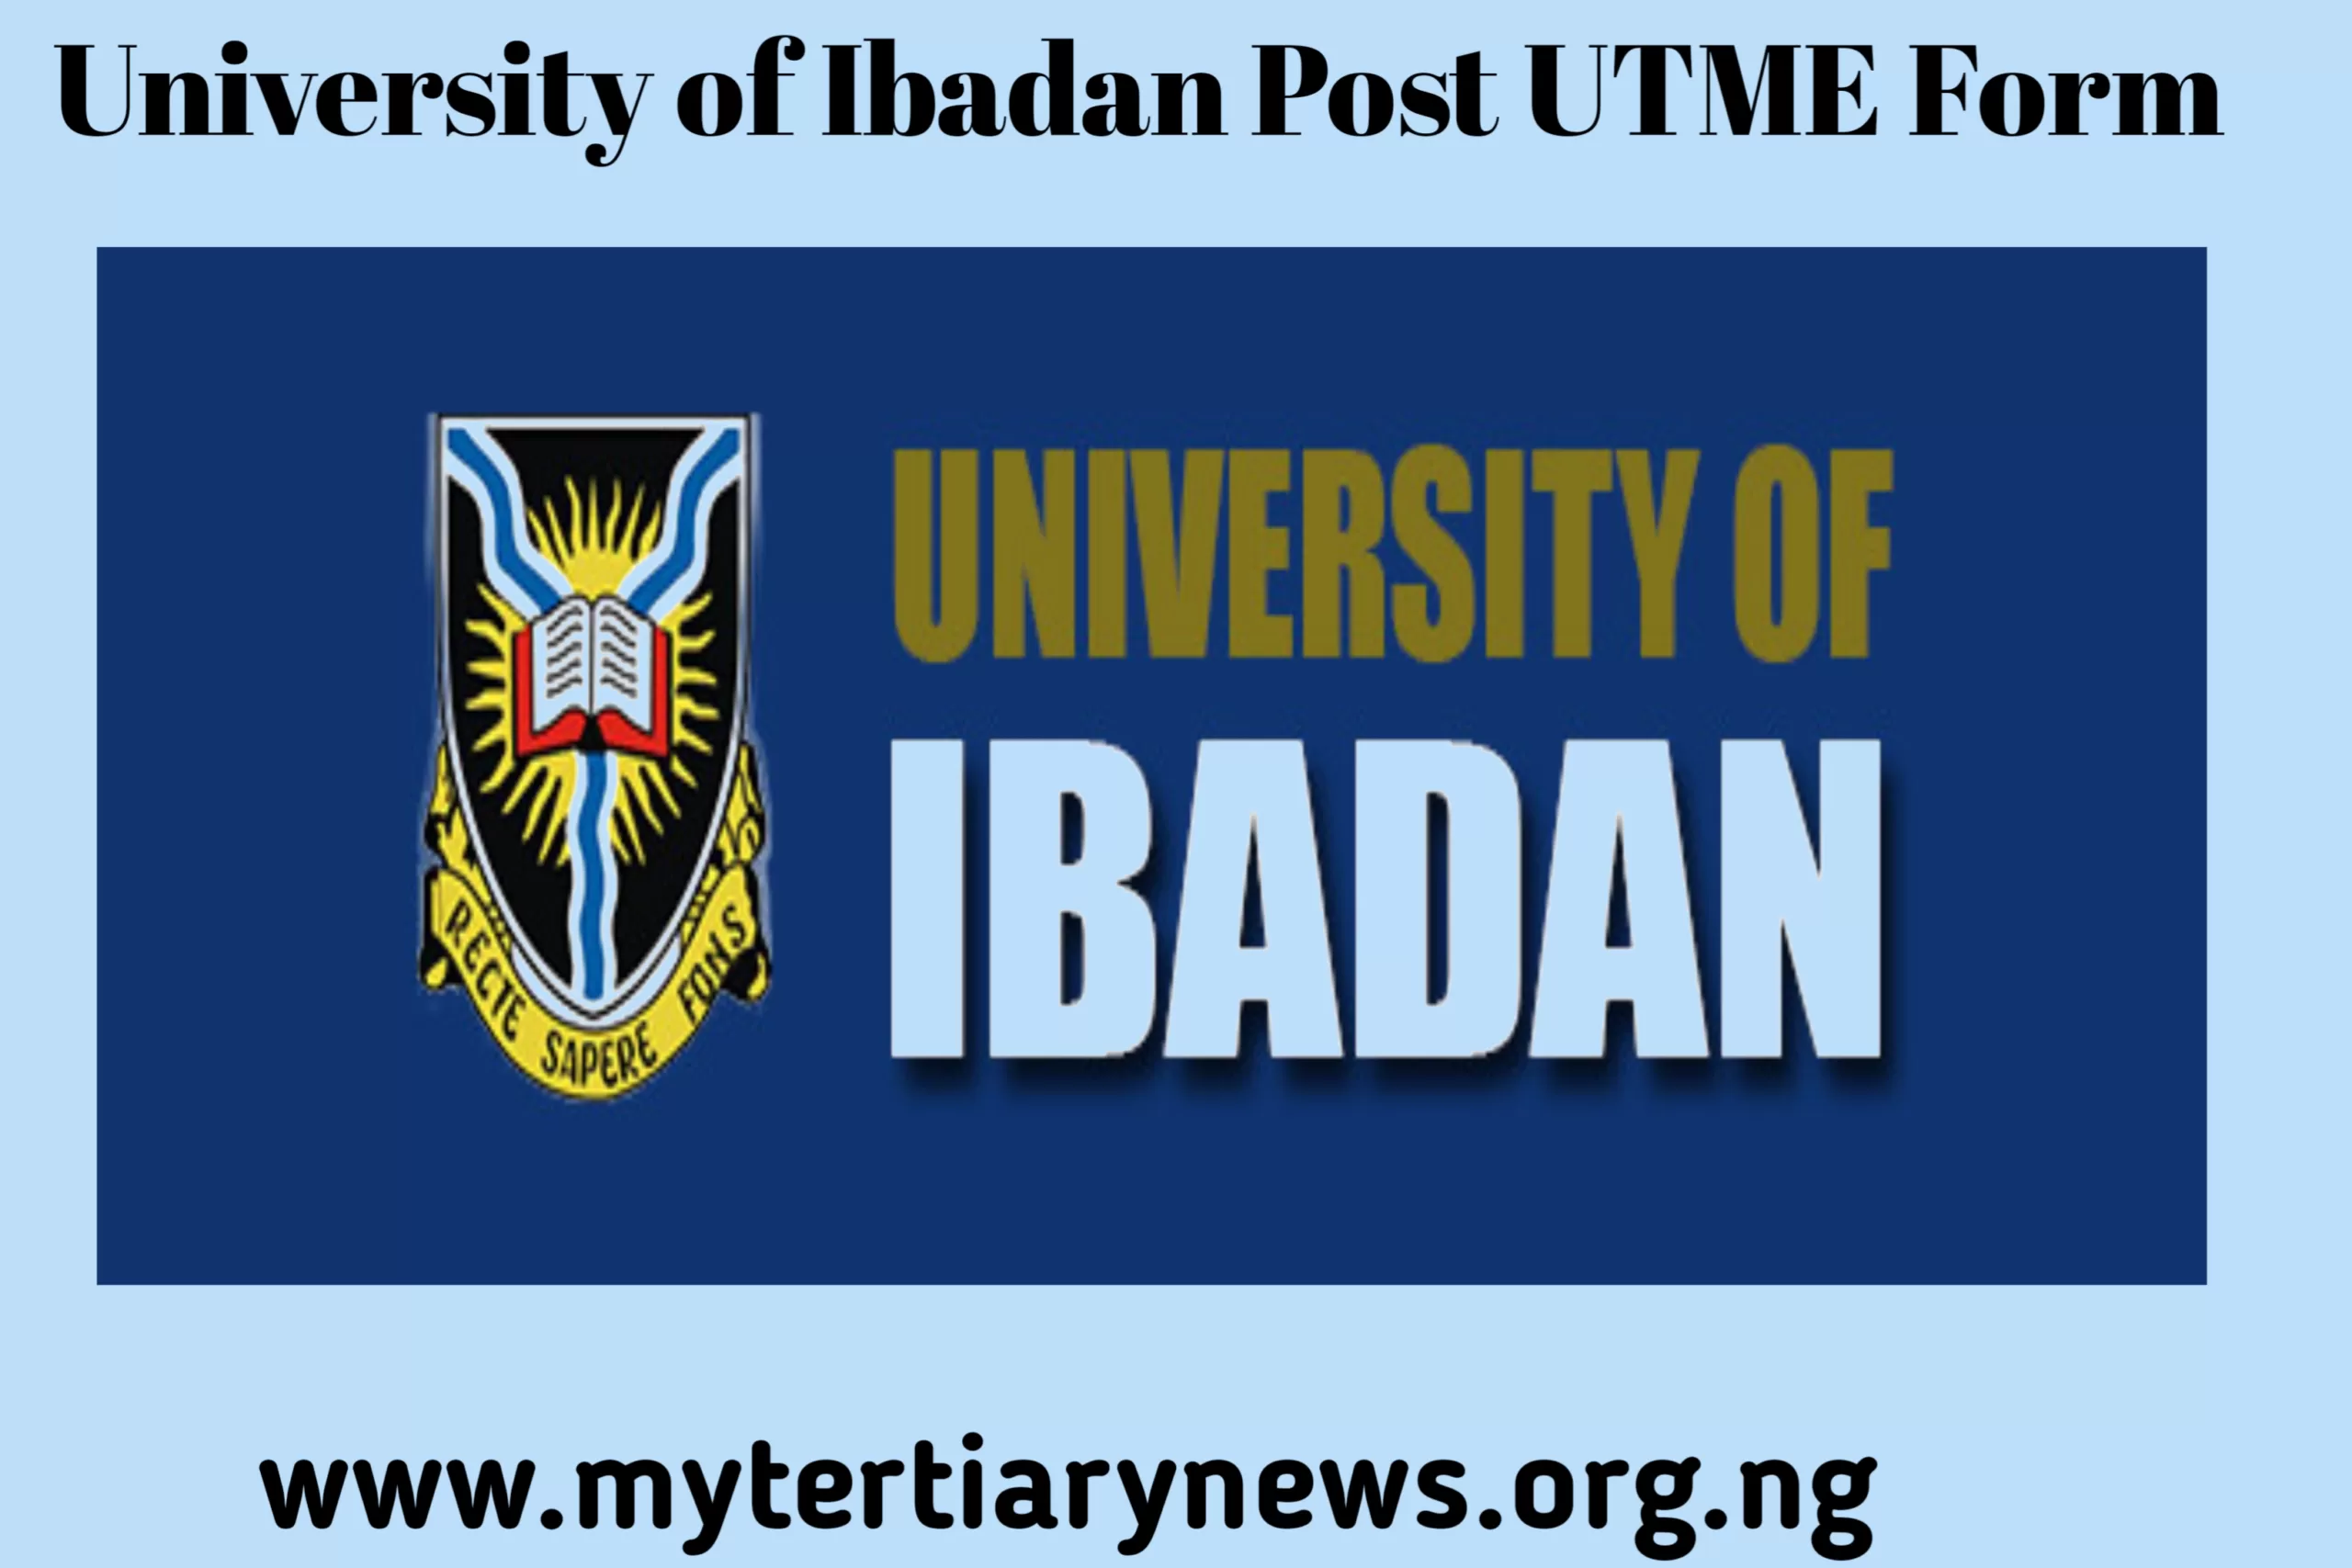 University of Ibadan Image || University of Ibadan Post UTME Form [Apply Now]